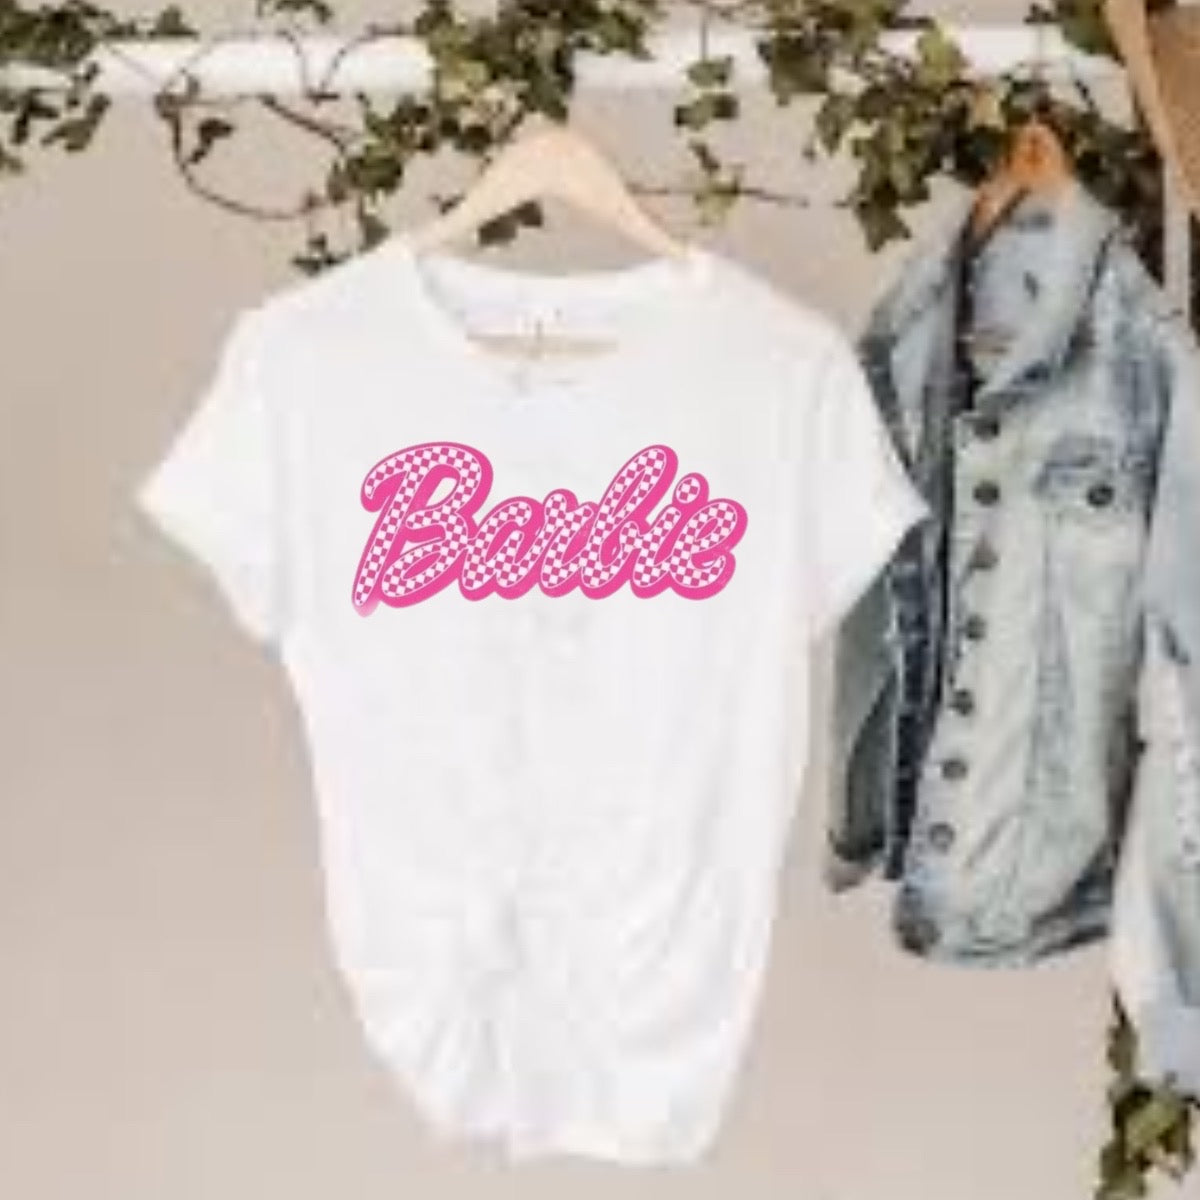 Barbie shirt| Barbie tee| Barbie movie| Barbie shirt| Barbie shirt| Barbie tee| Barbie Girl shirt